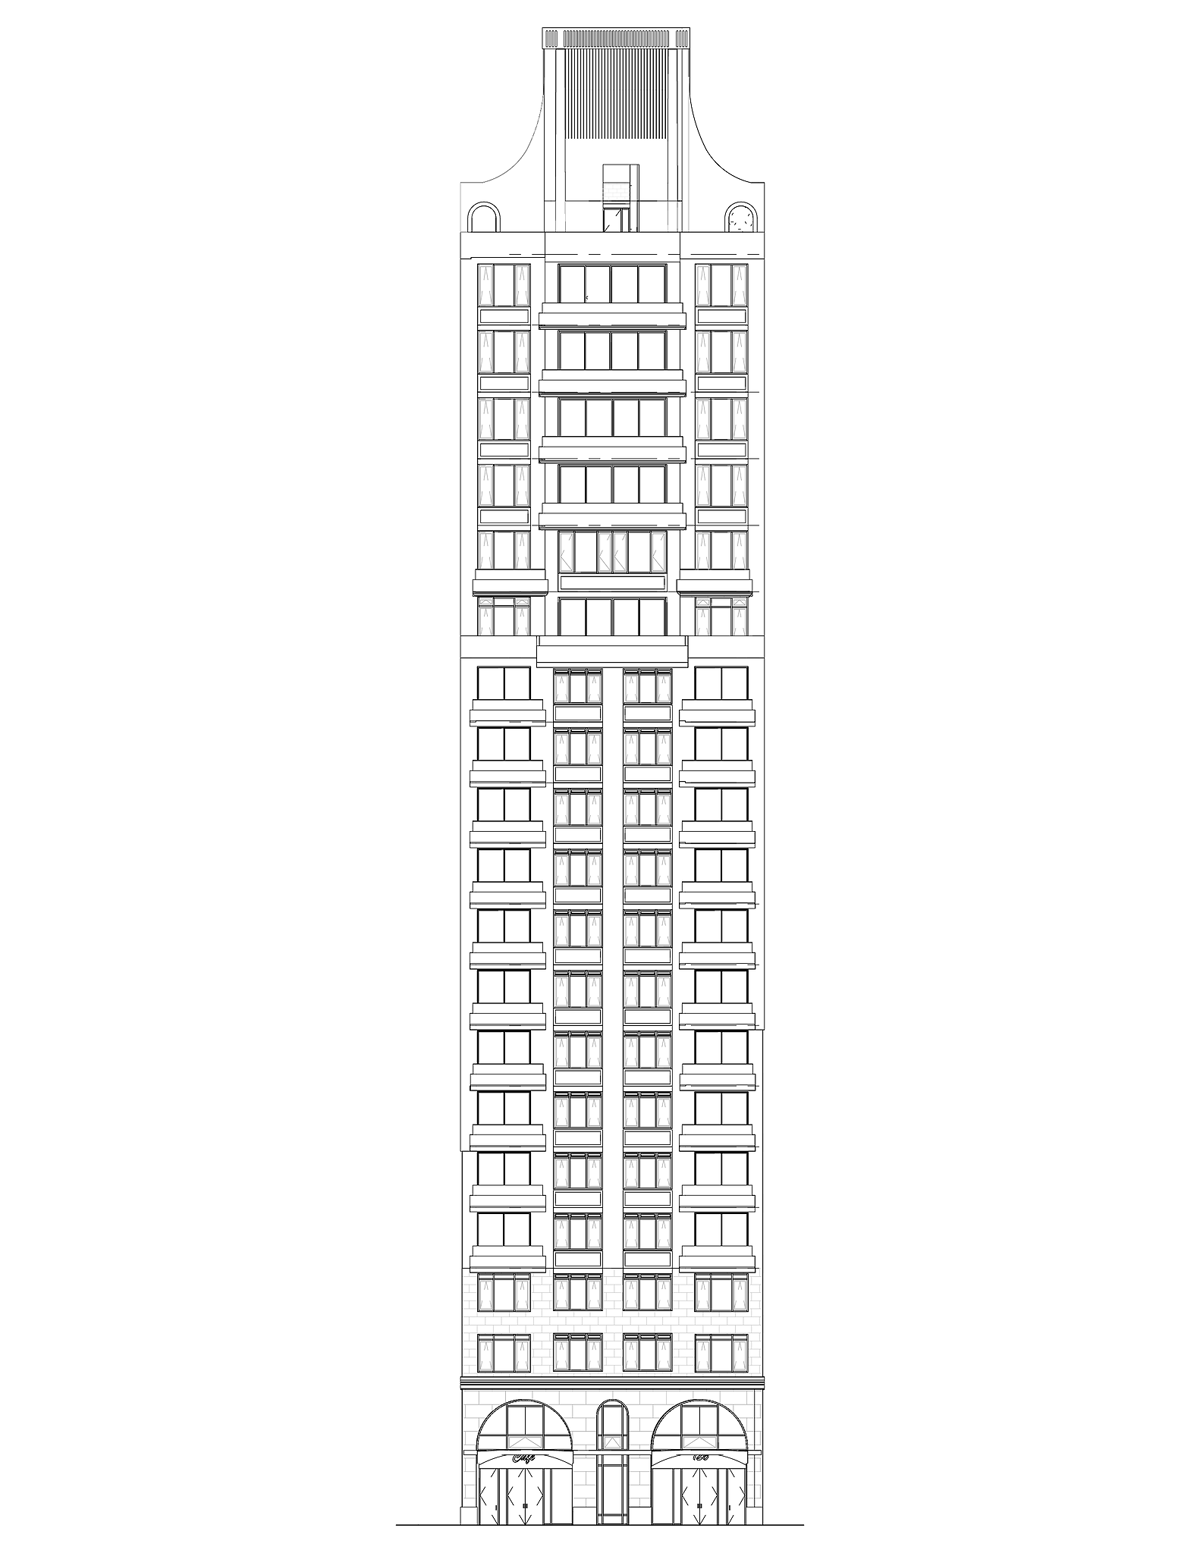 Photo for ARLOPARC - 126 East 86th Street Condominium in Upper East Side, Manhattan